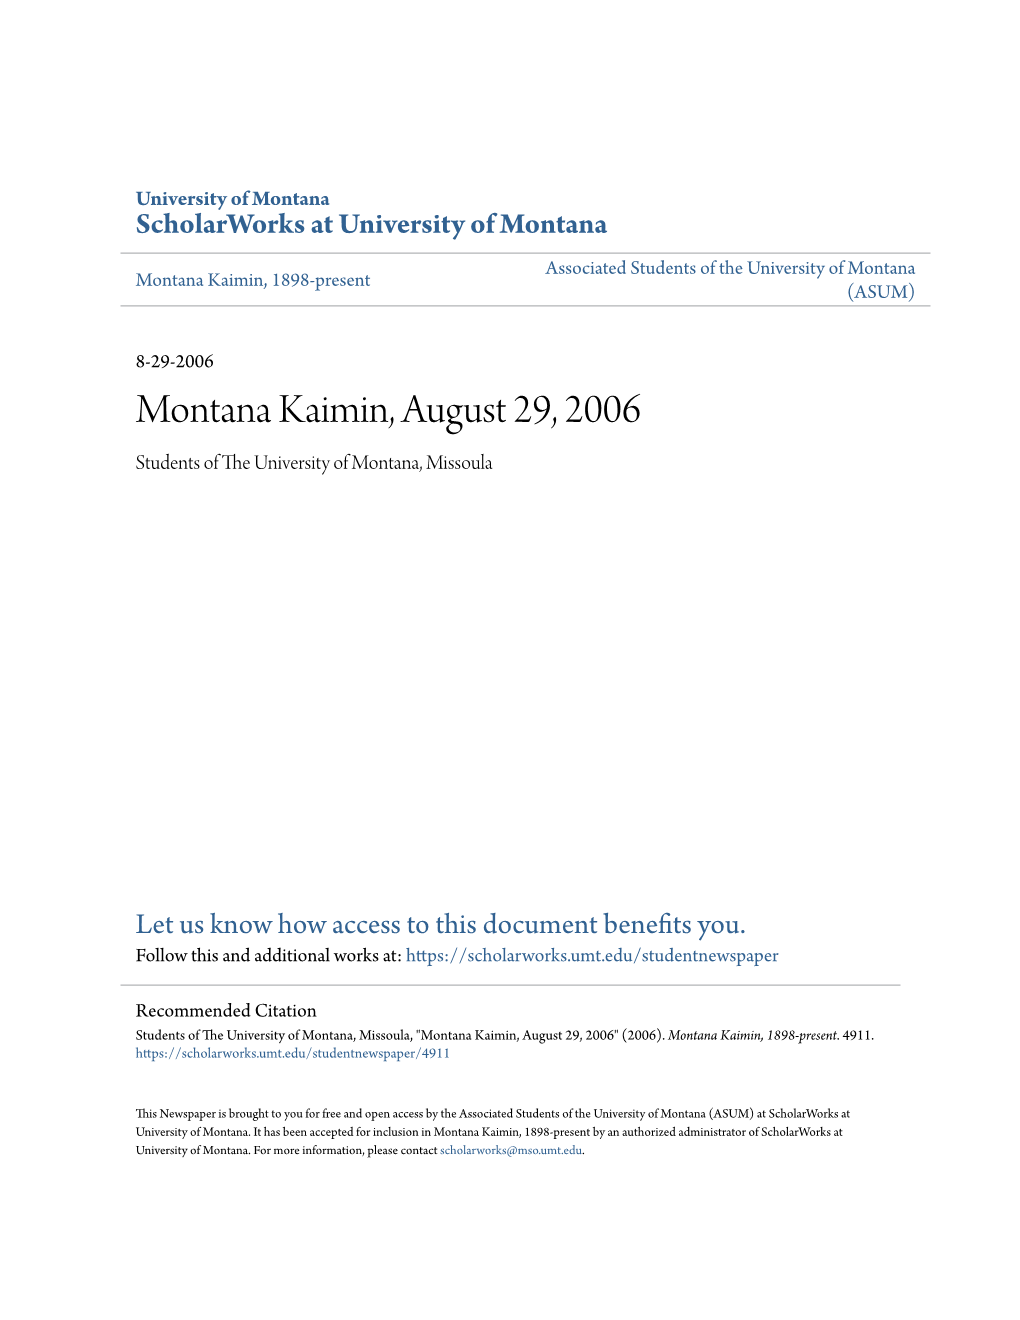 Montana Kaimin, August 29, 2006 Students of the Niu Versity of Montana, Missoula